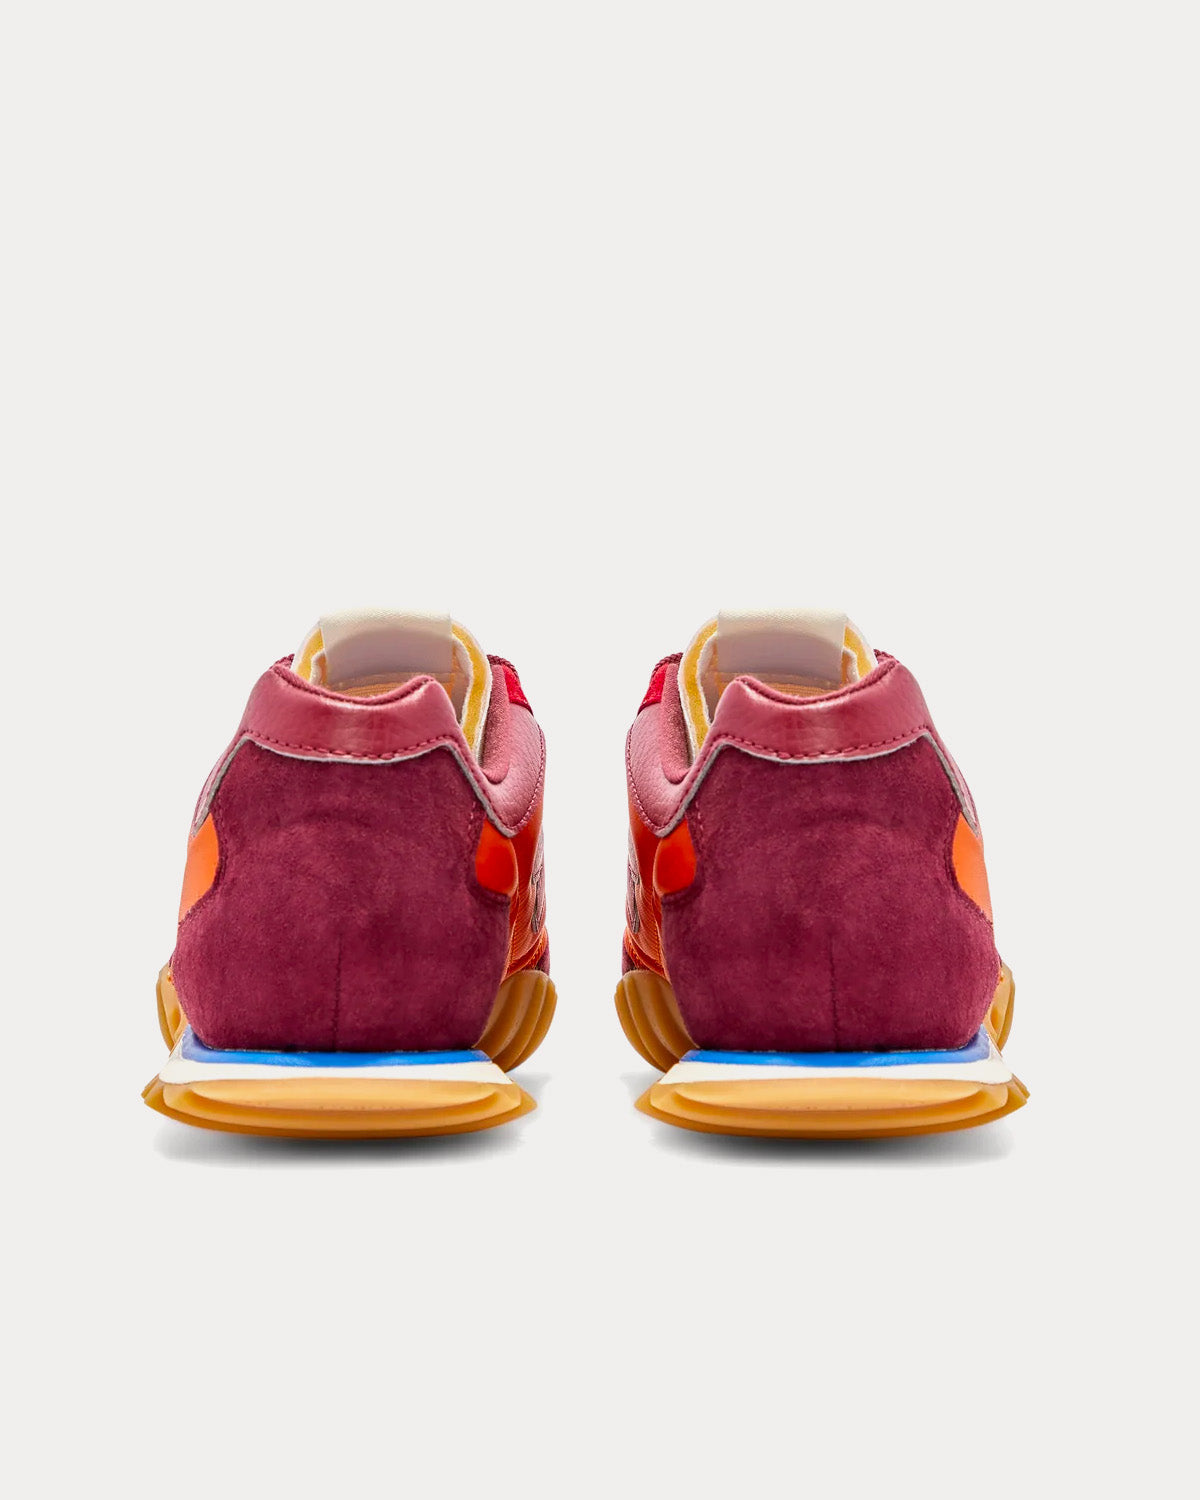 New Balance x Junya Watanabe - URC30 Orange / Red Low Top Sneakers